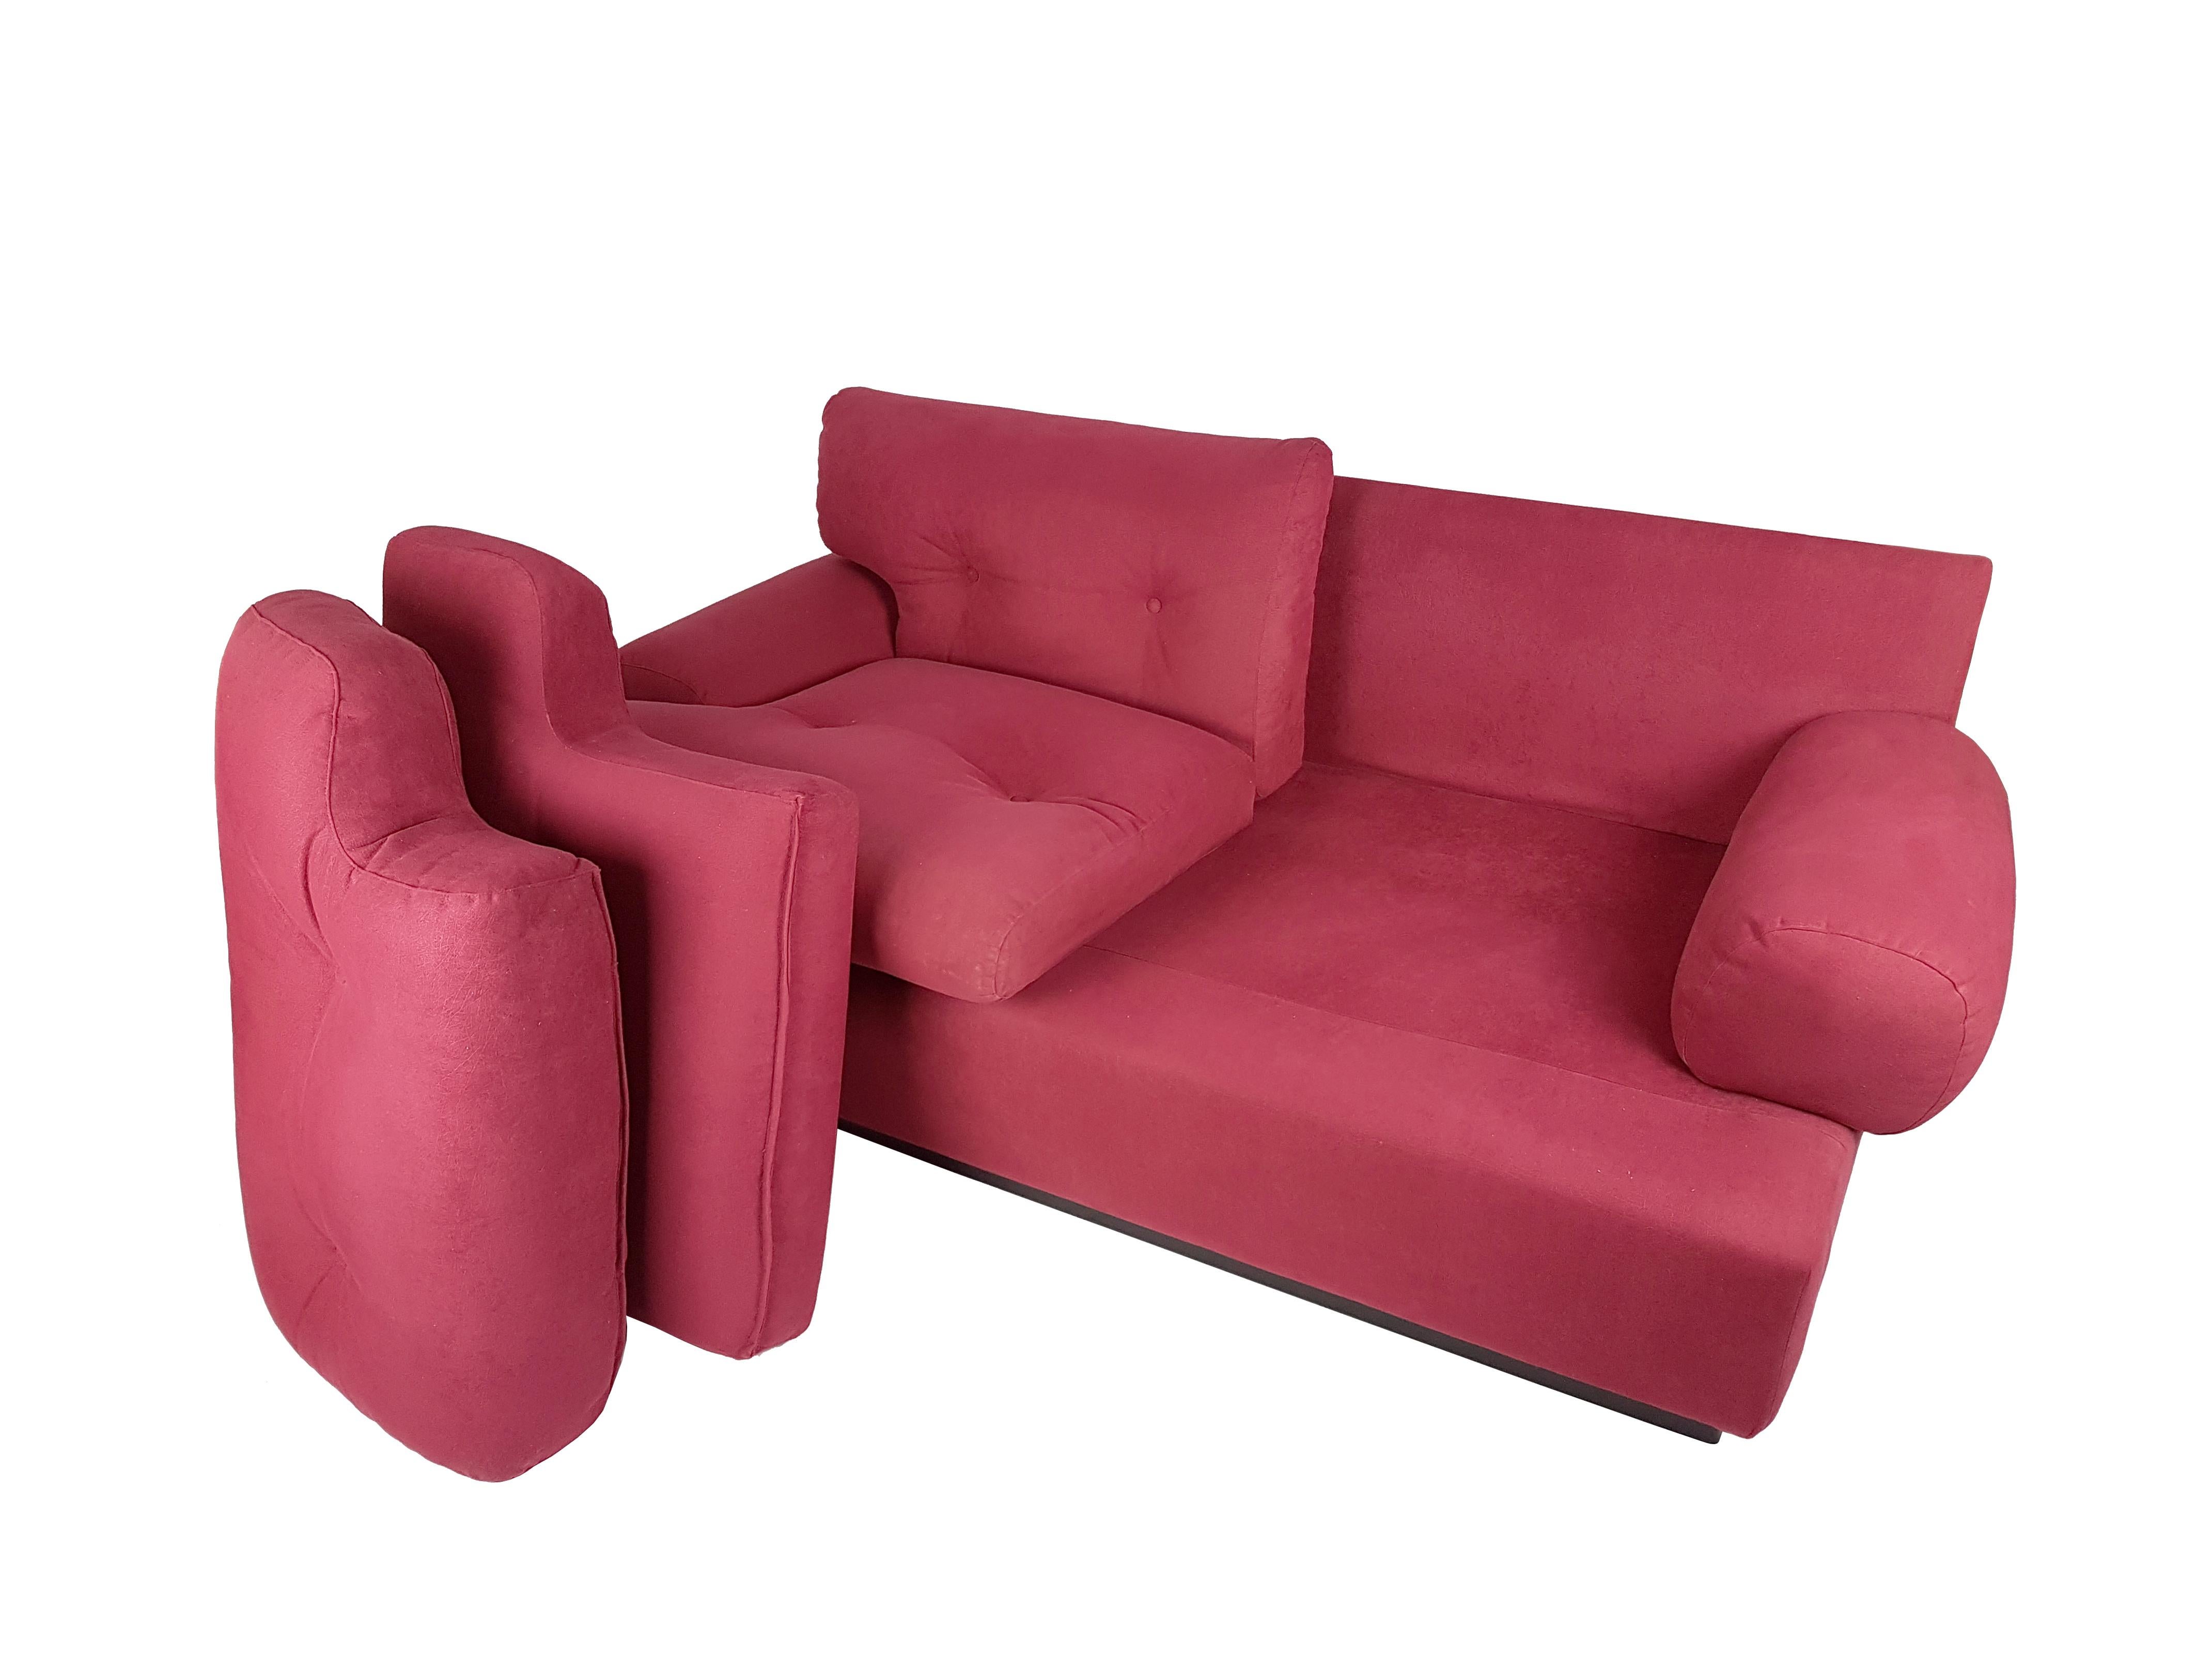 Fabric Pair of Alcantara Crimson & Wood 2-Seat 1960s Sofa by Cassina For Sale